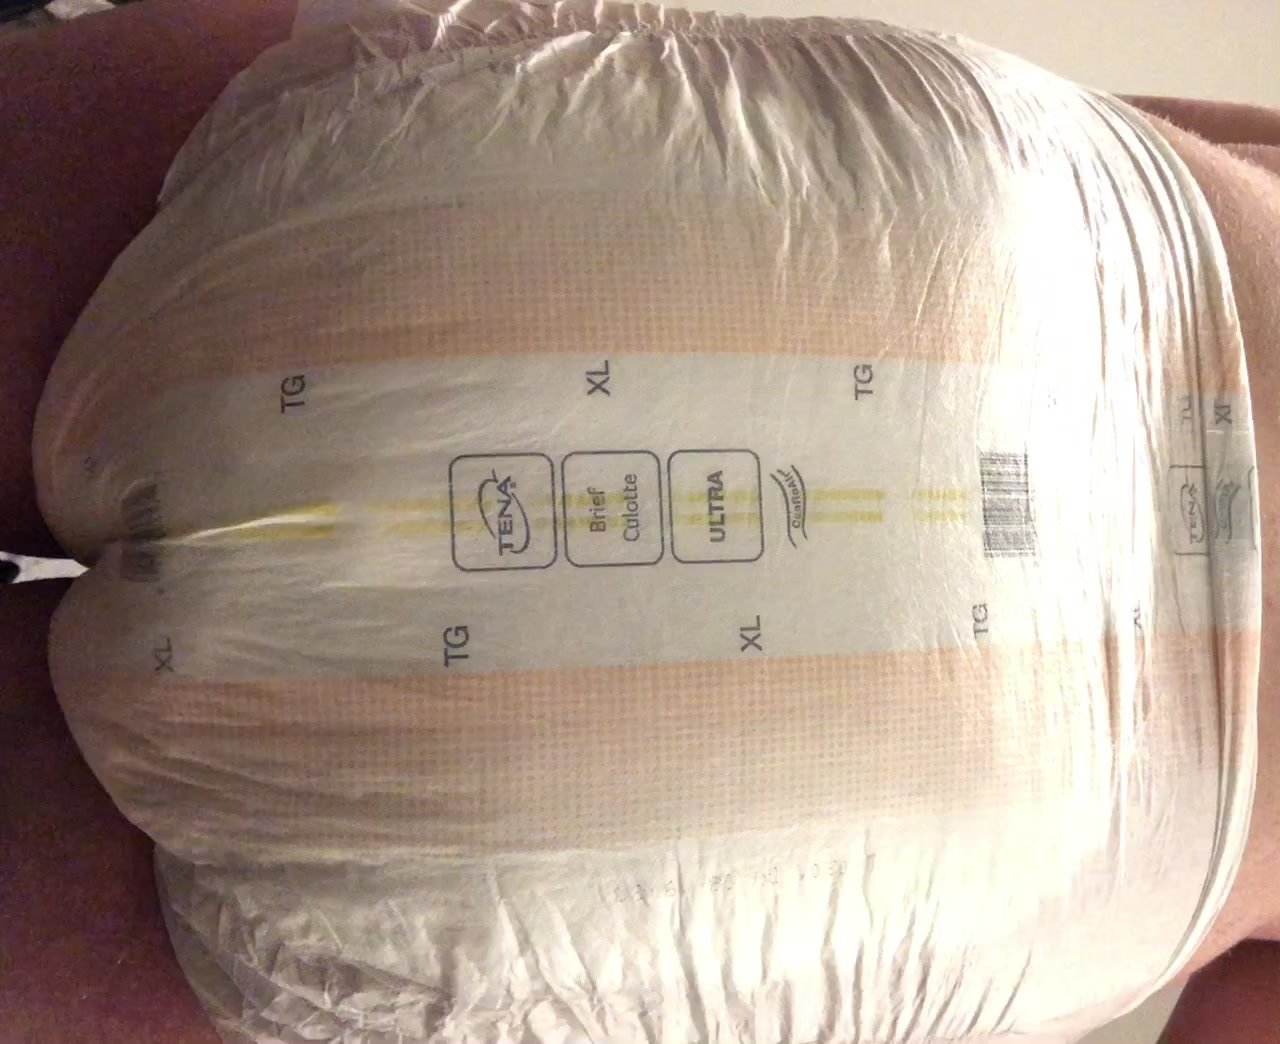 Marshmallow Mess in Tena Diaper